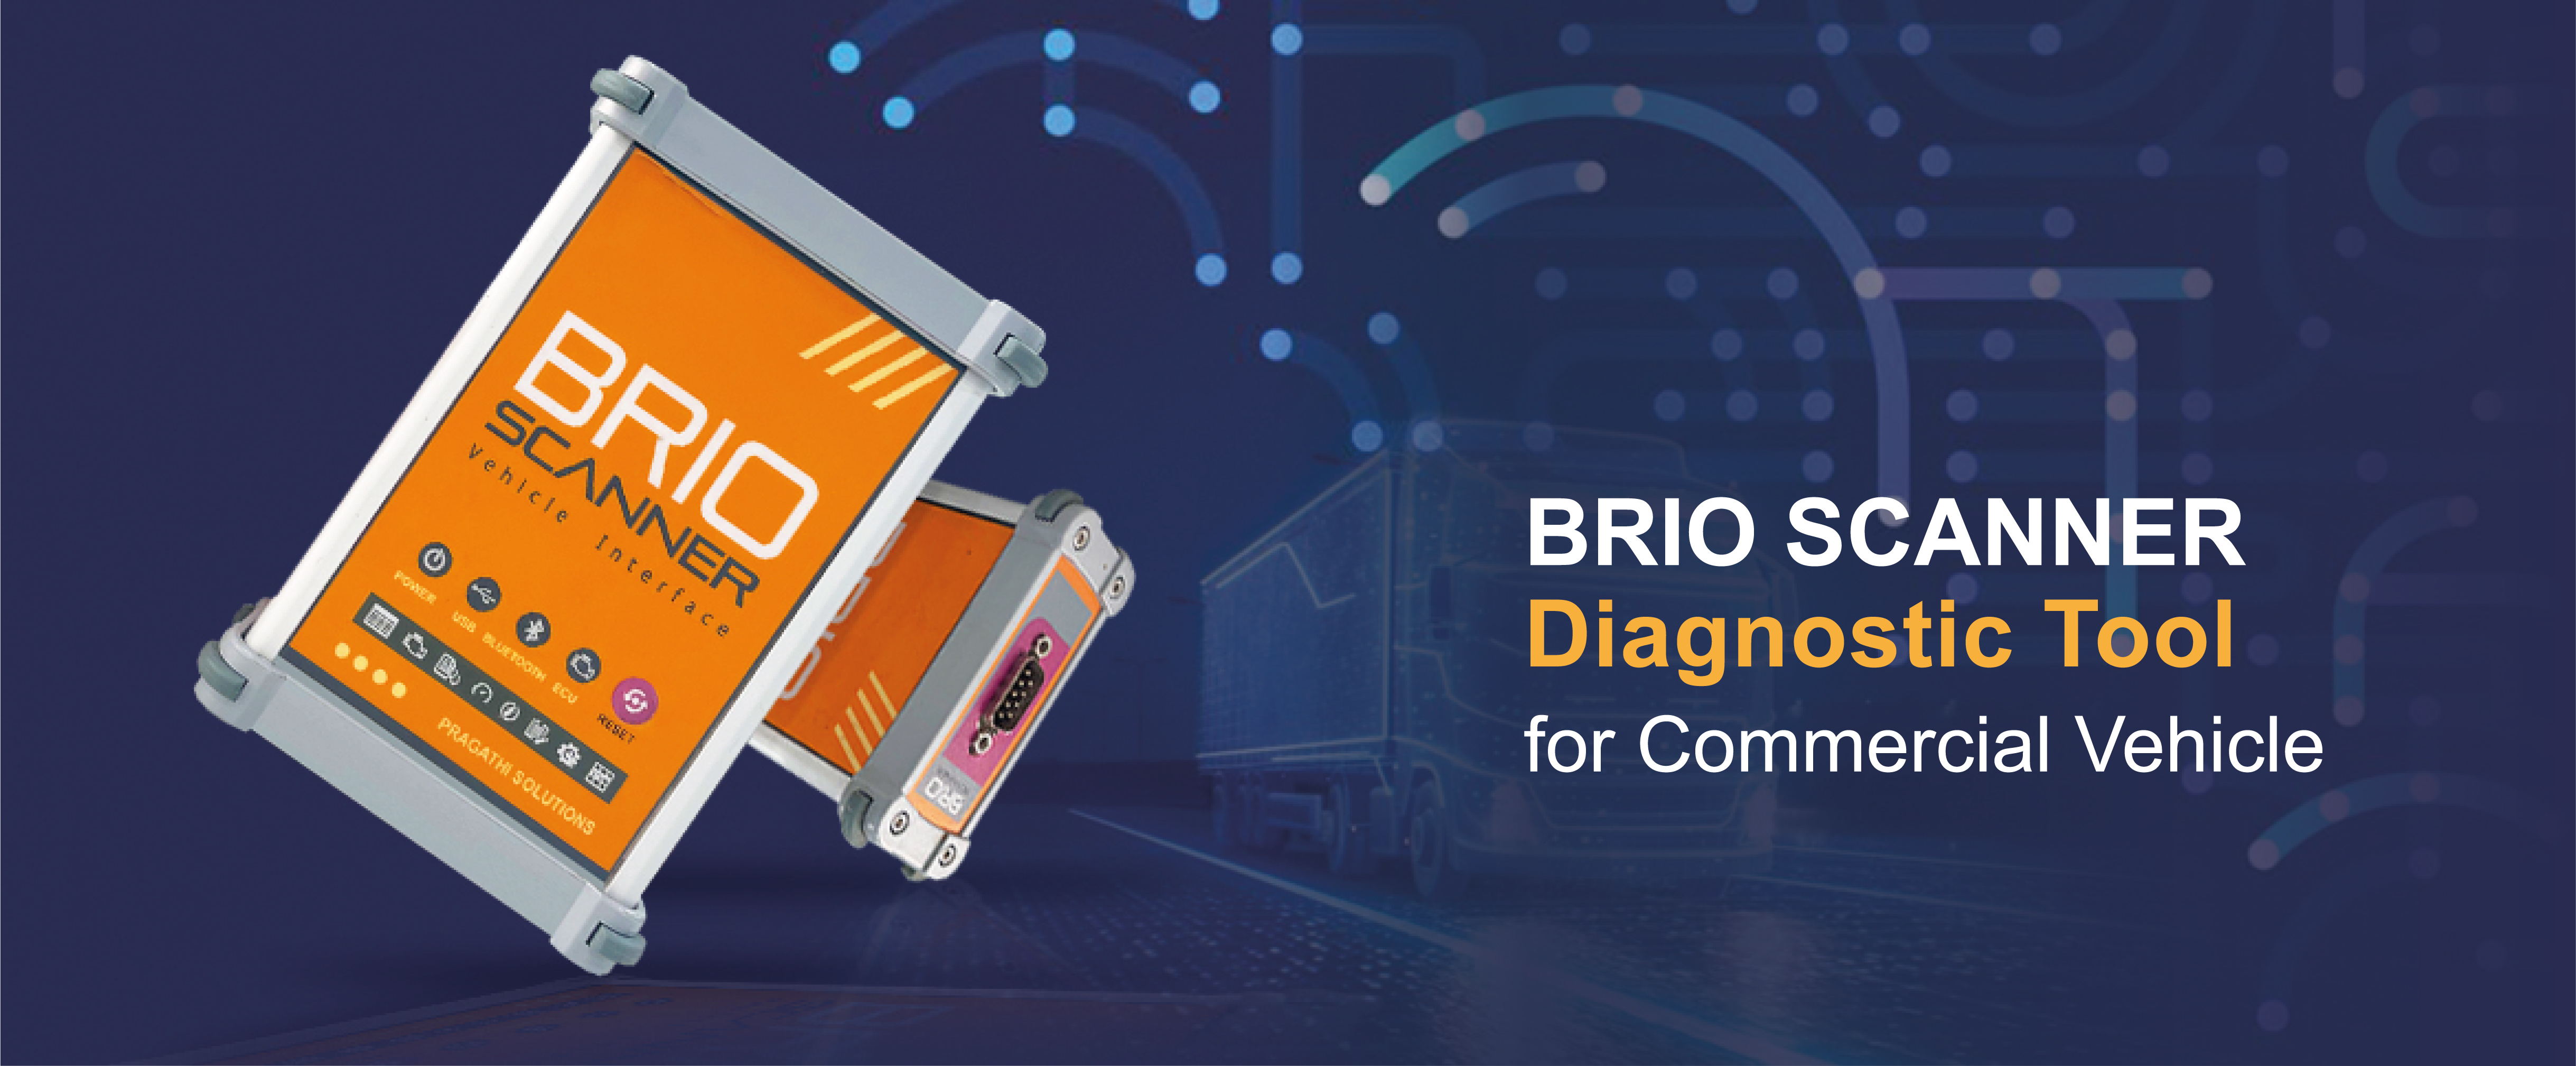 Brio scanner Diagnostics Tool for Commerical vehicle